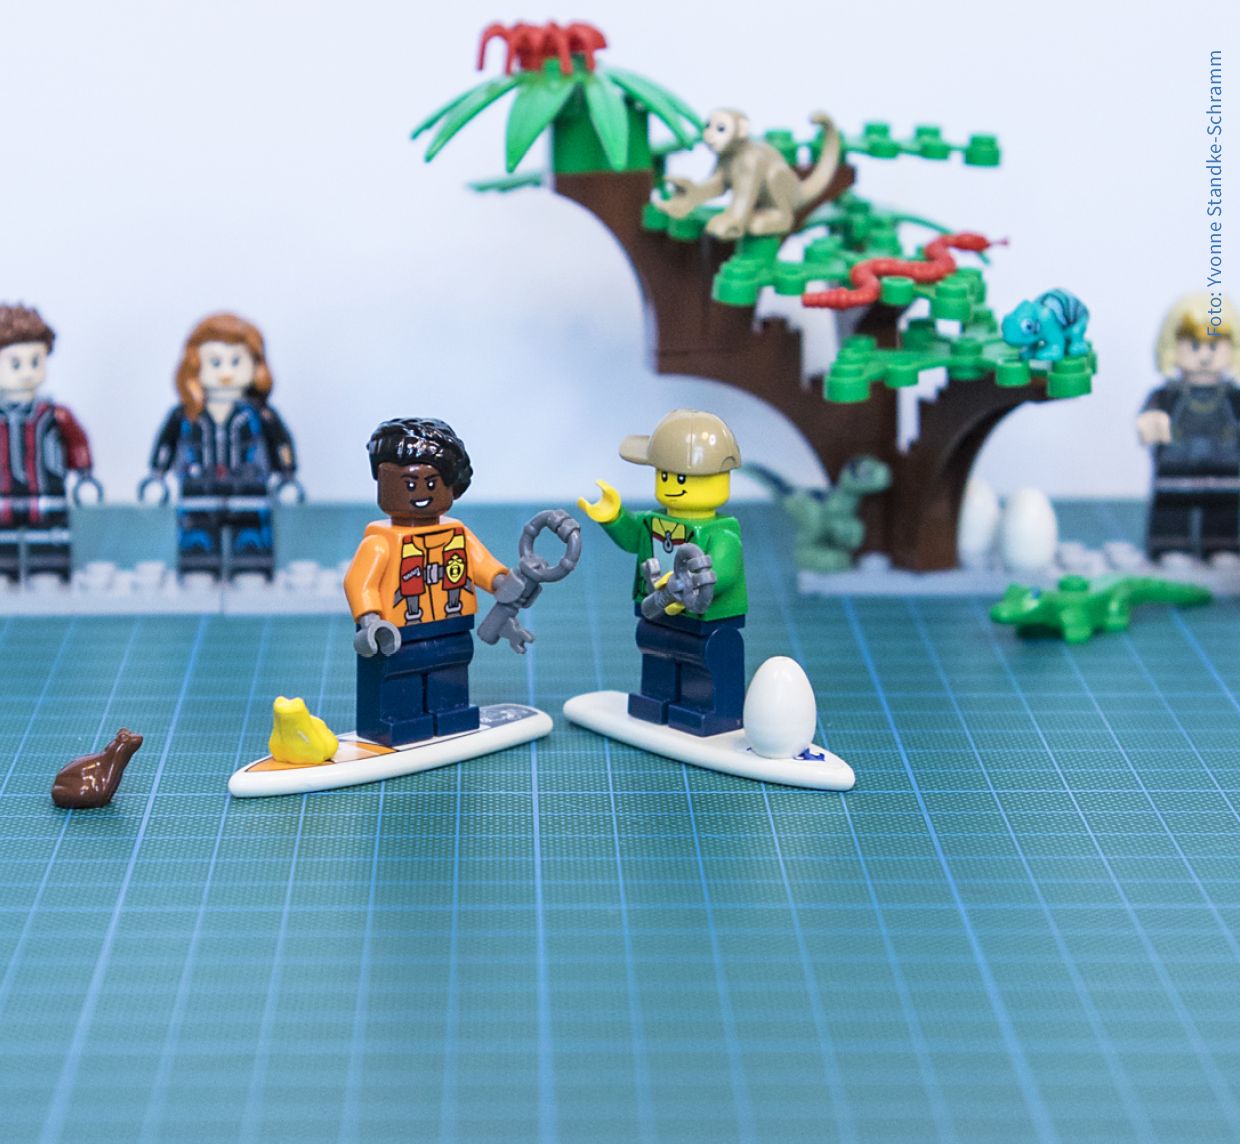 Surfende Kinder vor Superheld:innen in Lego